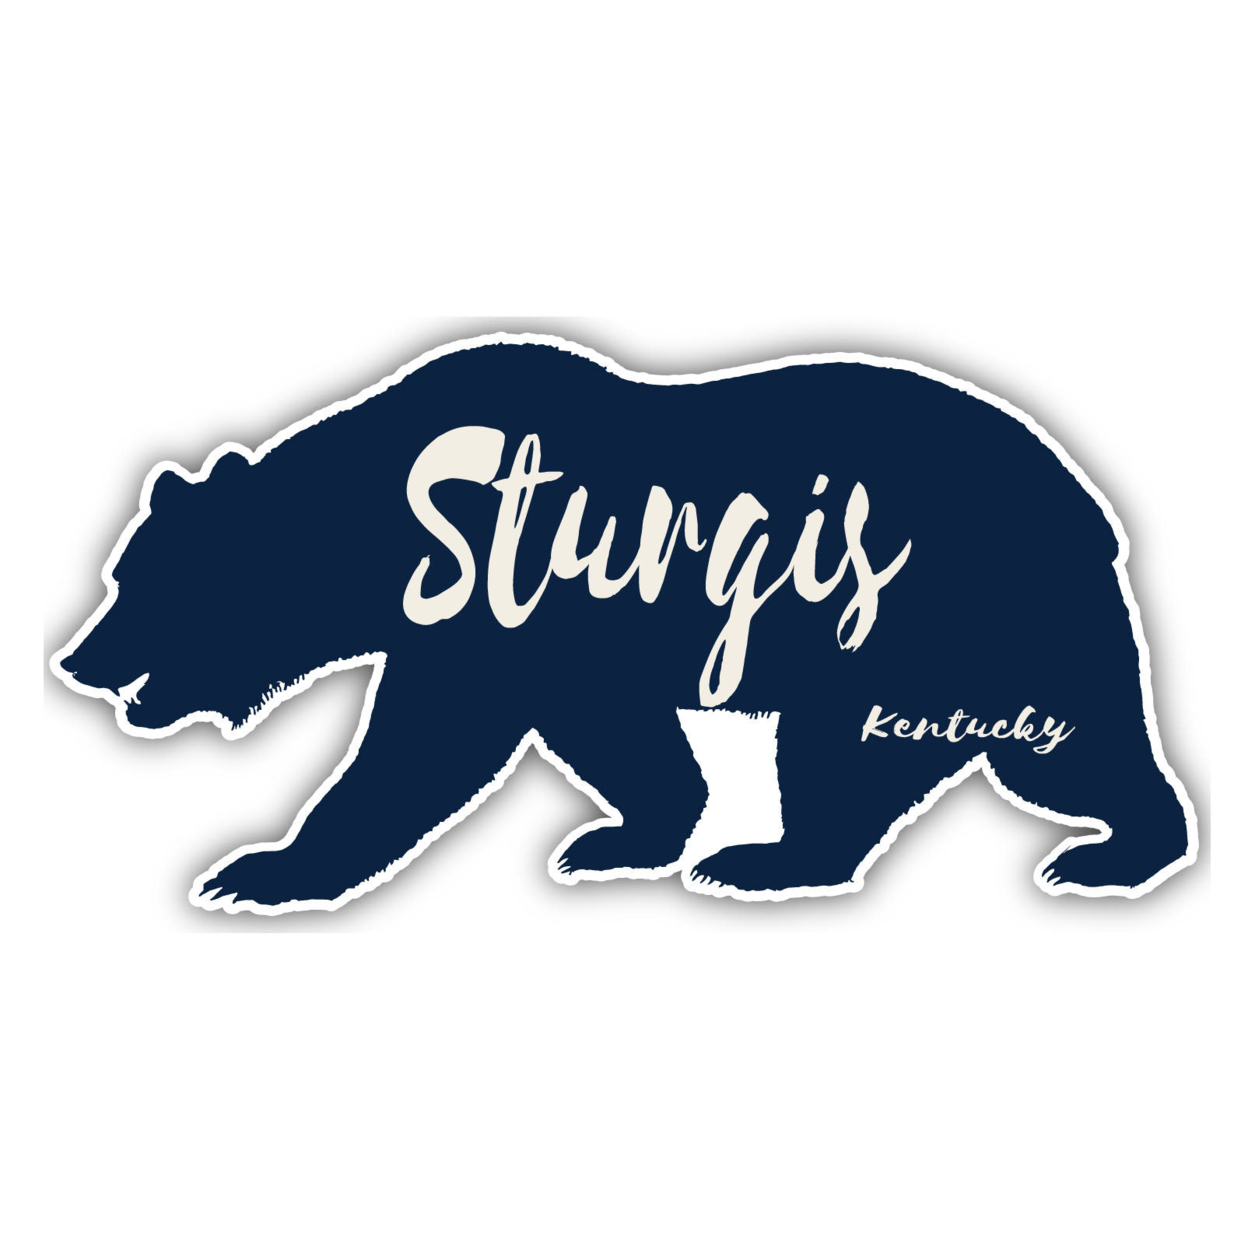 Sturgis Kentucky Souvenir Decorative Stickers (Choose Theme And Size) - Single Unit, 2-Inch, Bear